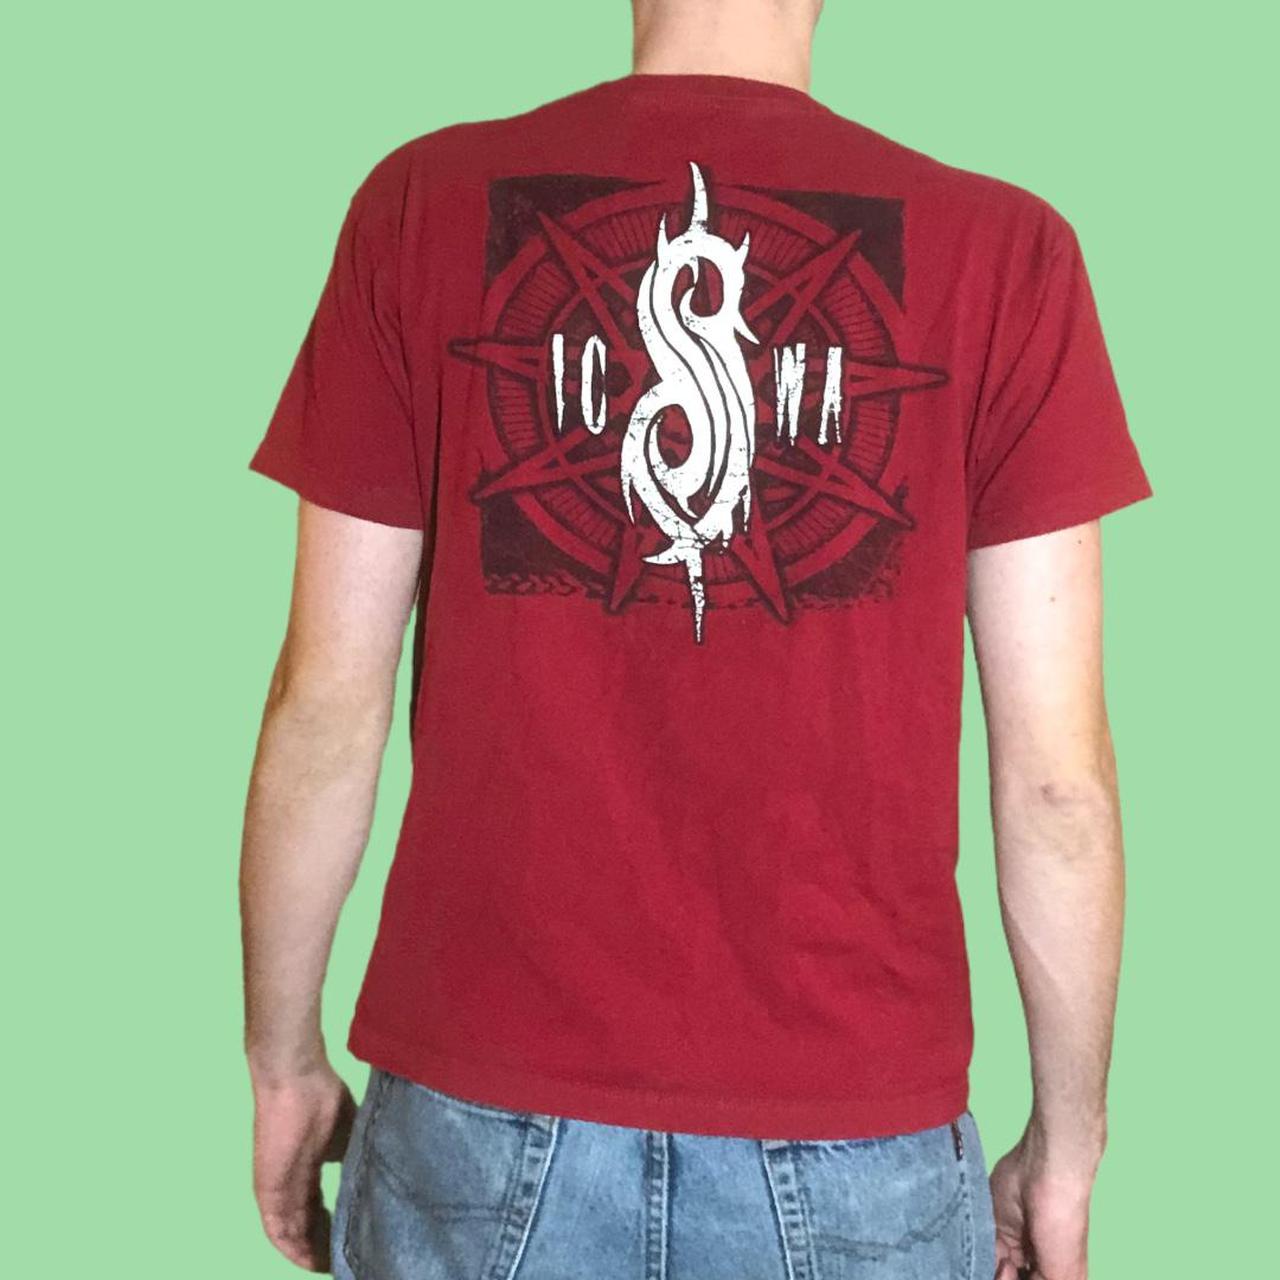 Product Image 3 - Red Slipknot metal t-shirt

Sick Satanic